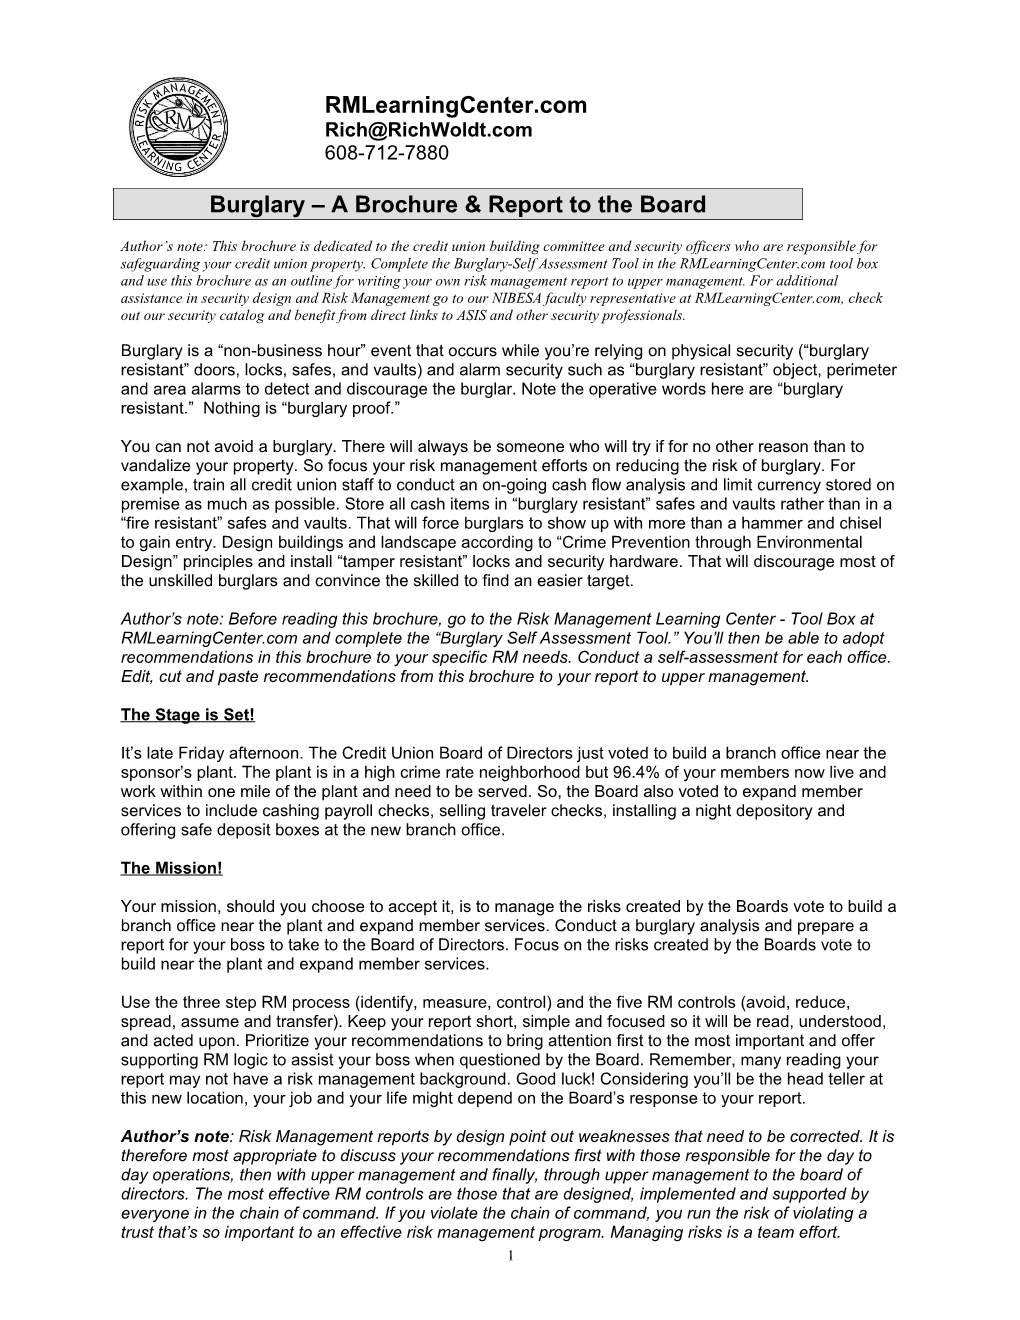 Burglary a Brochure & Report to the Board